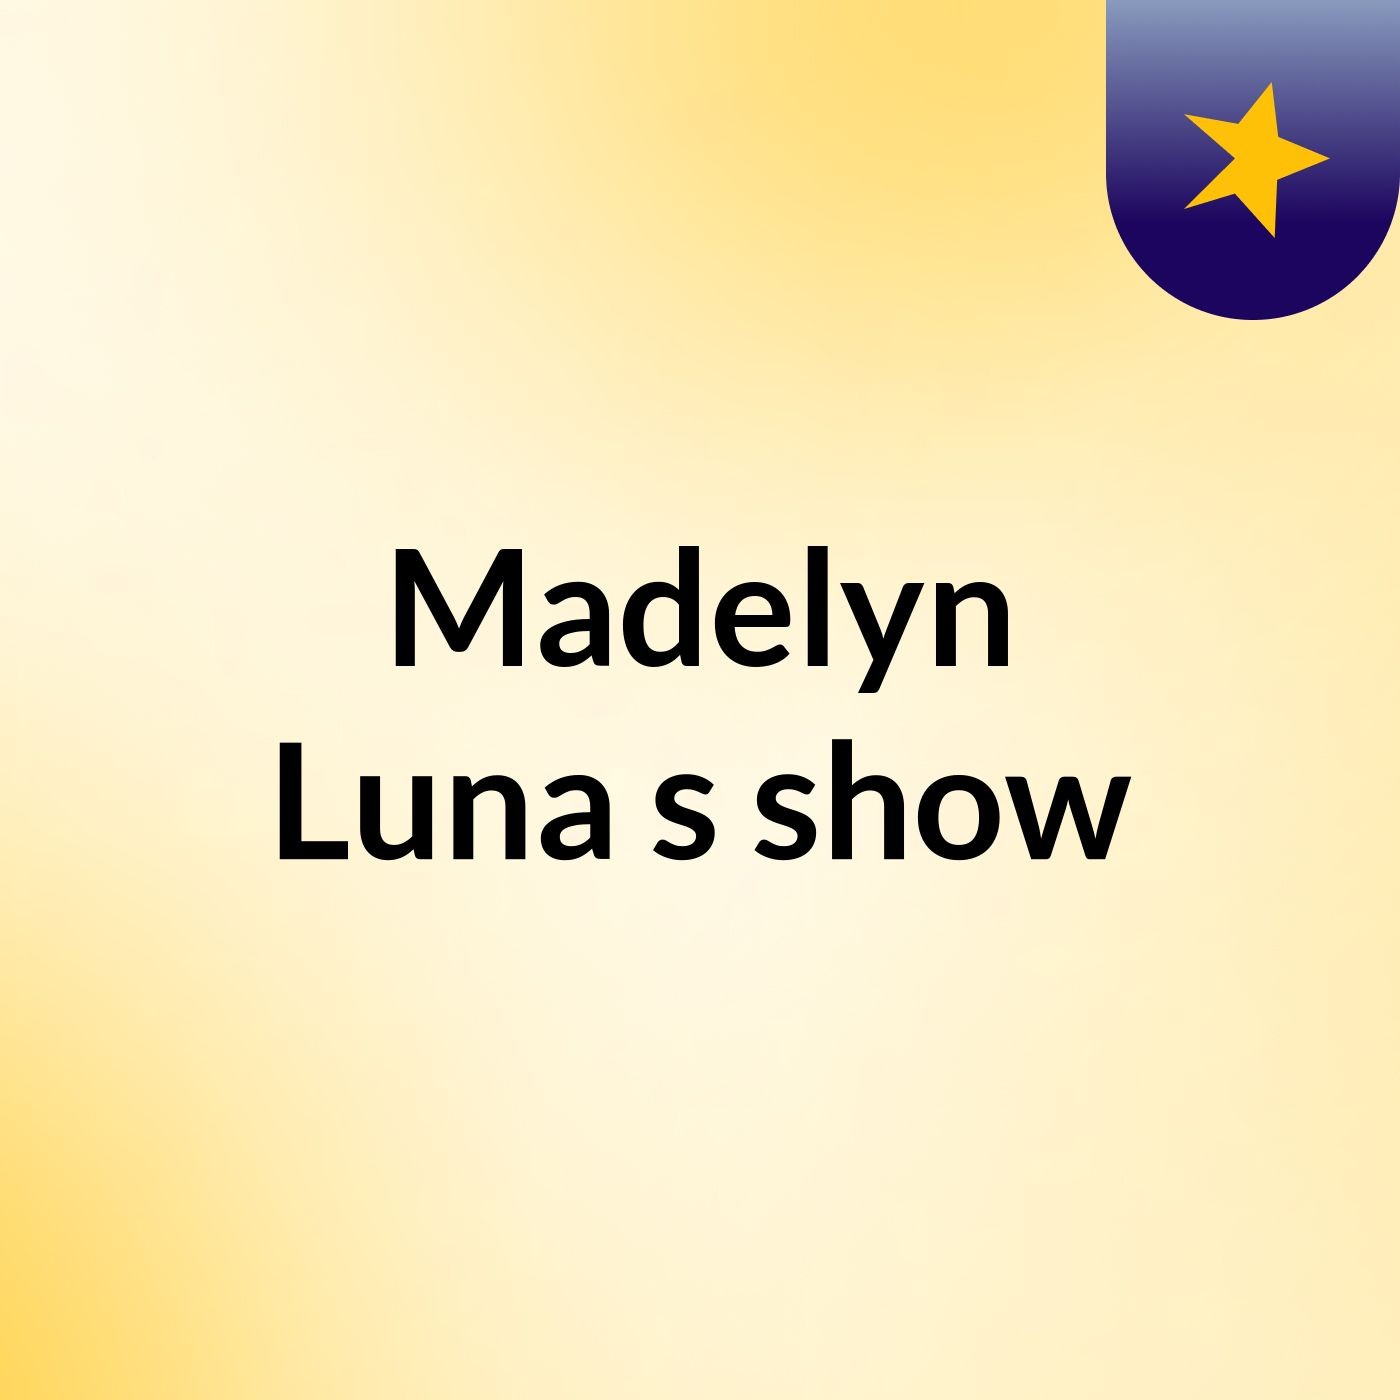 Madelyn Luna's show